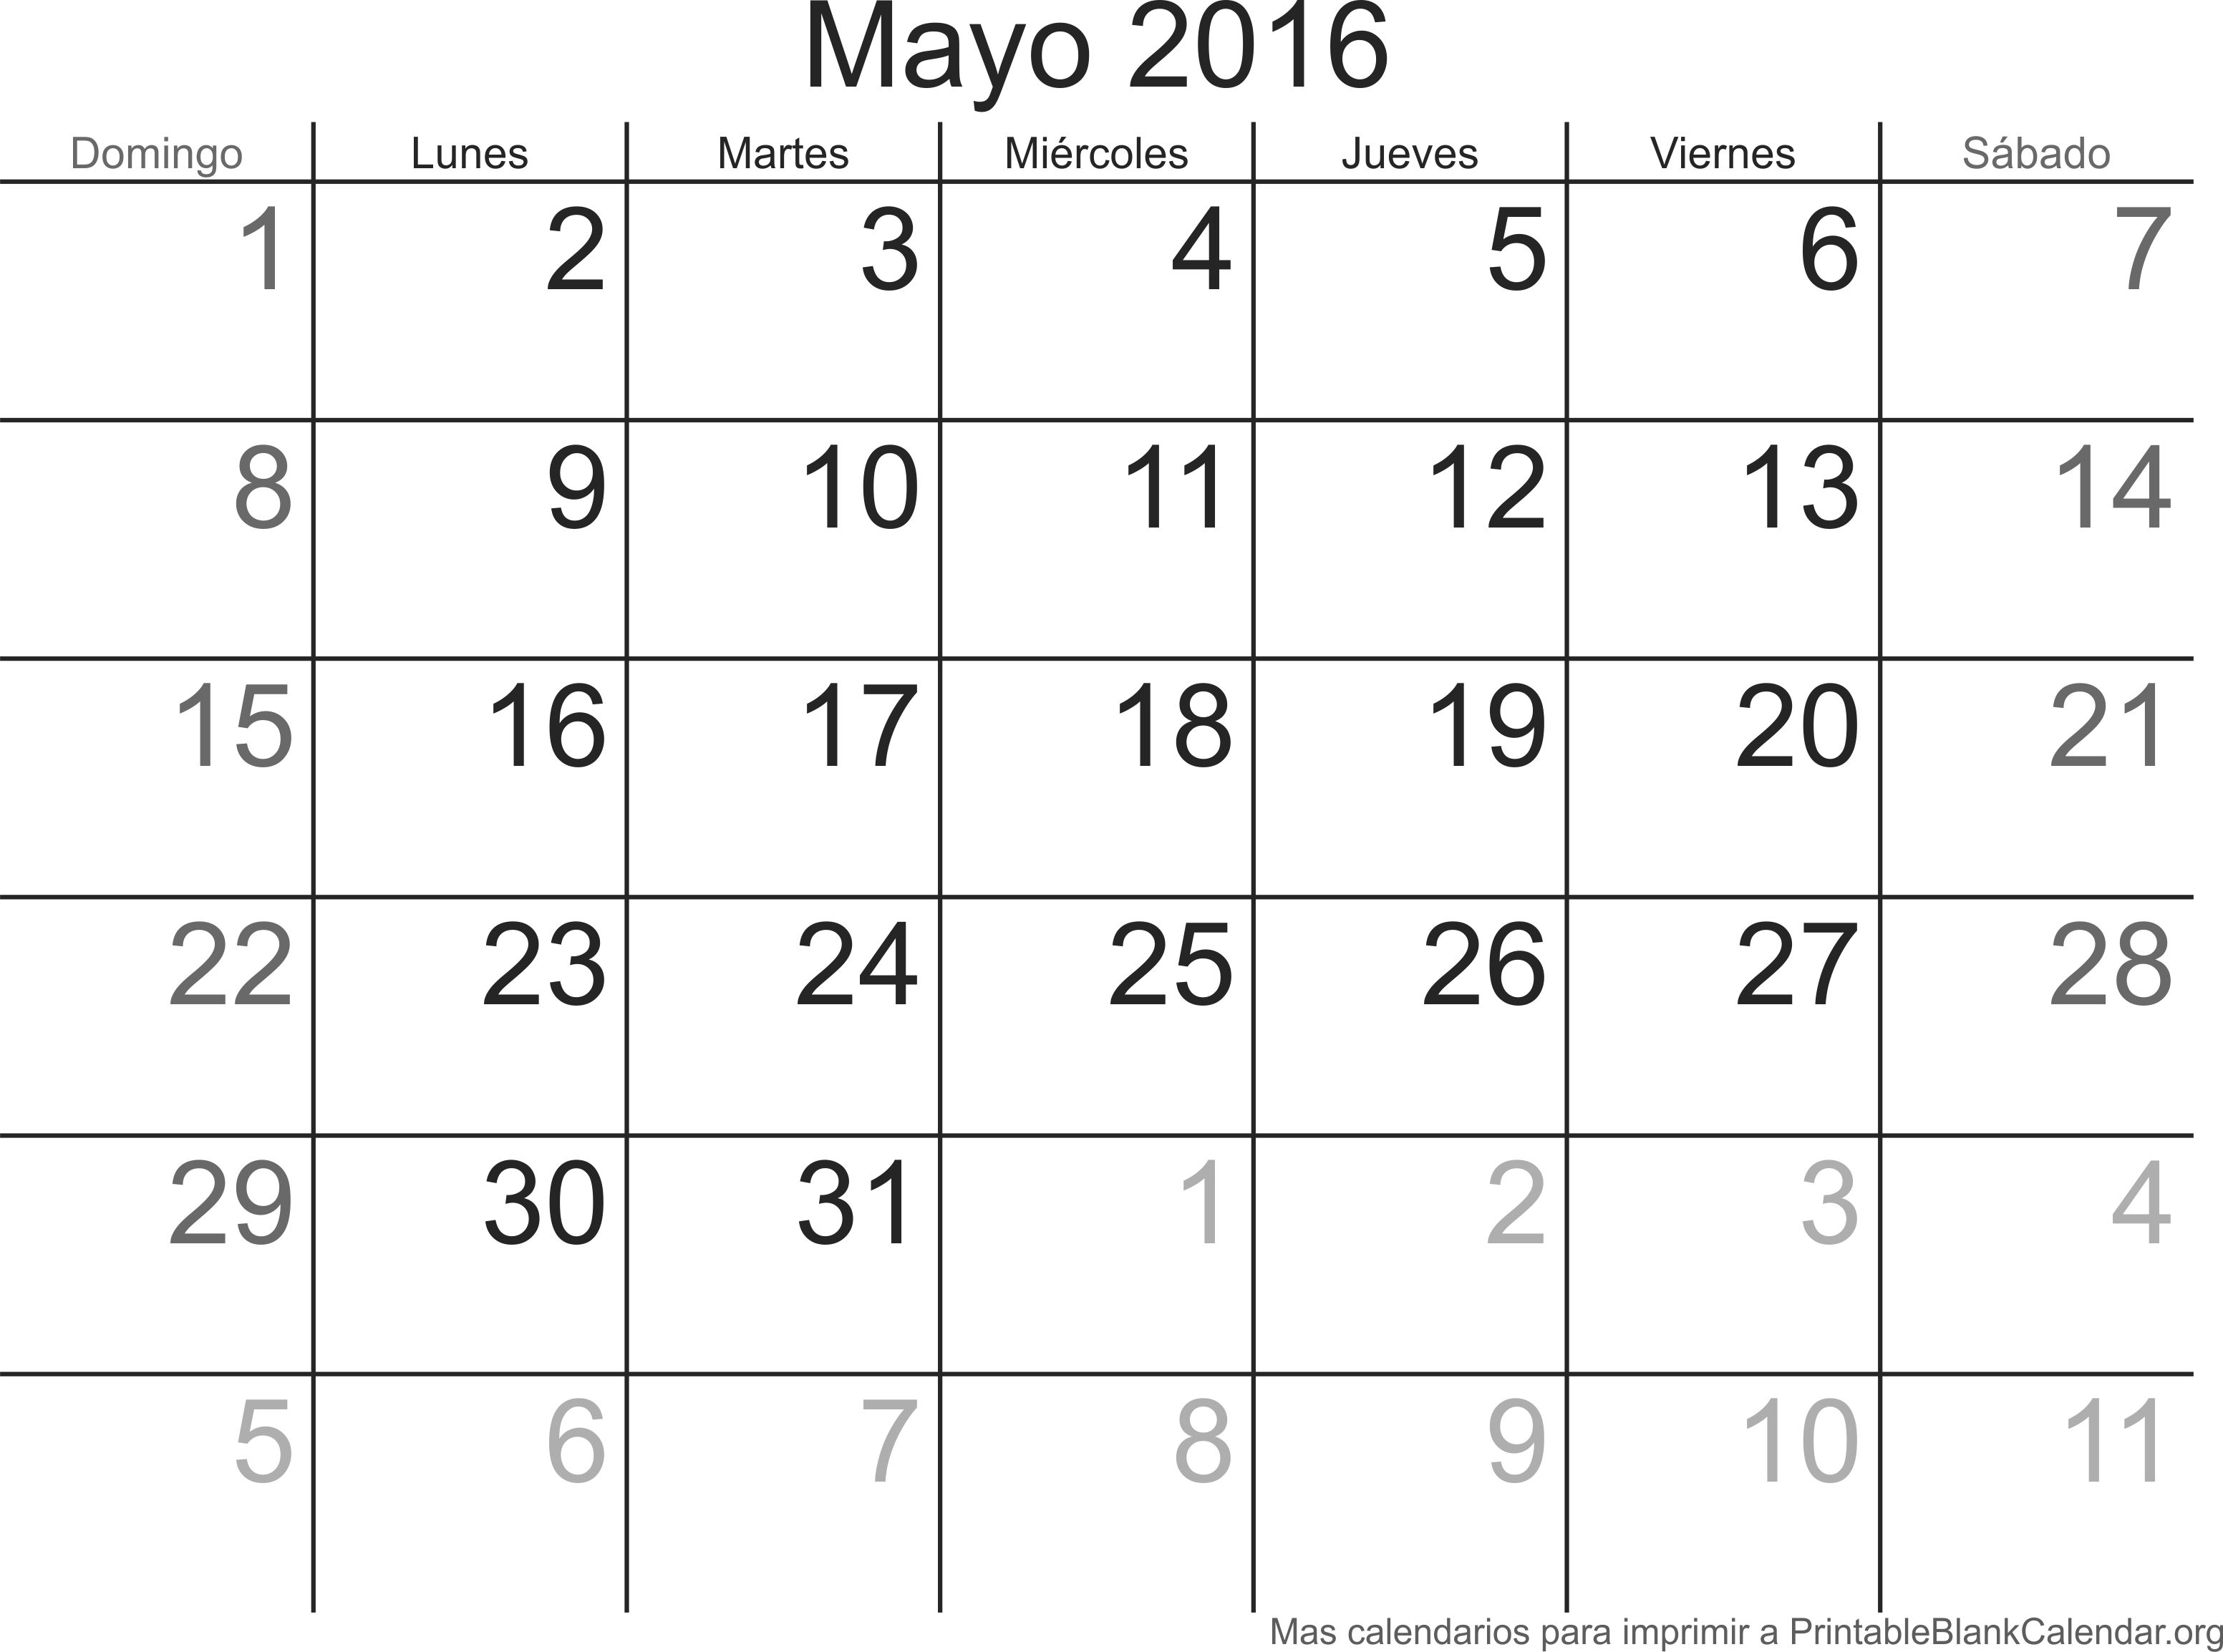 May 2016 calendario